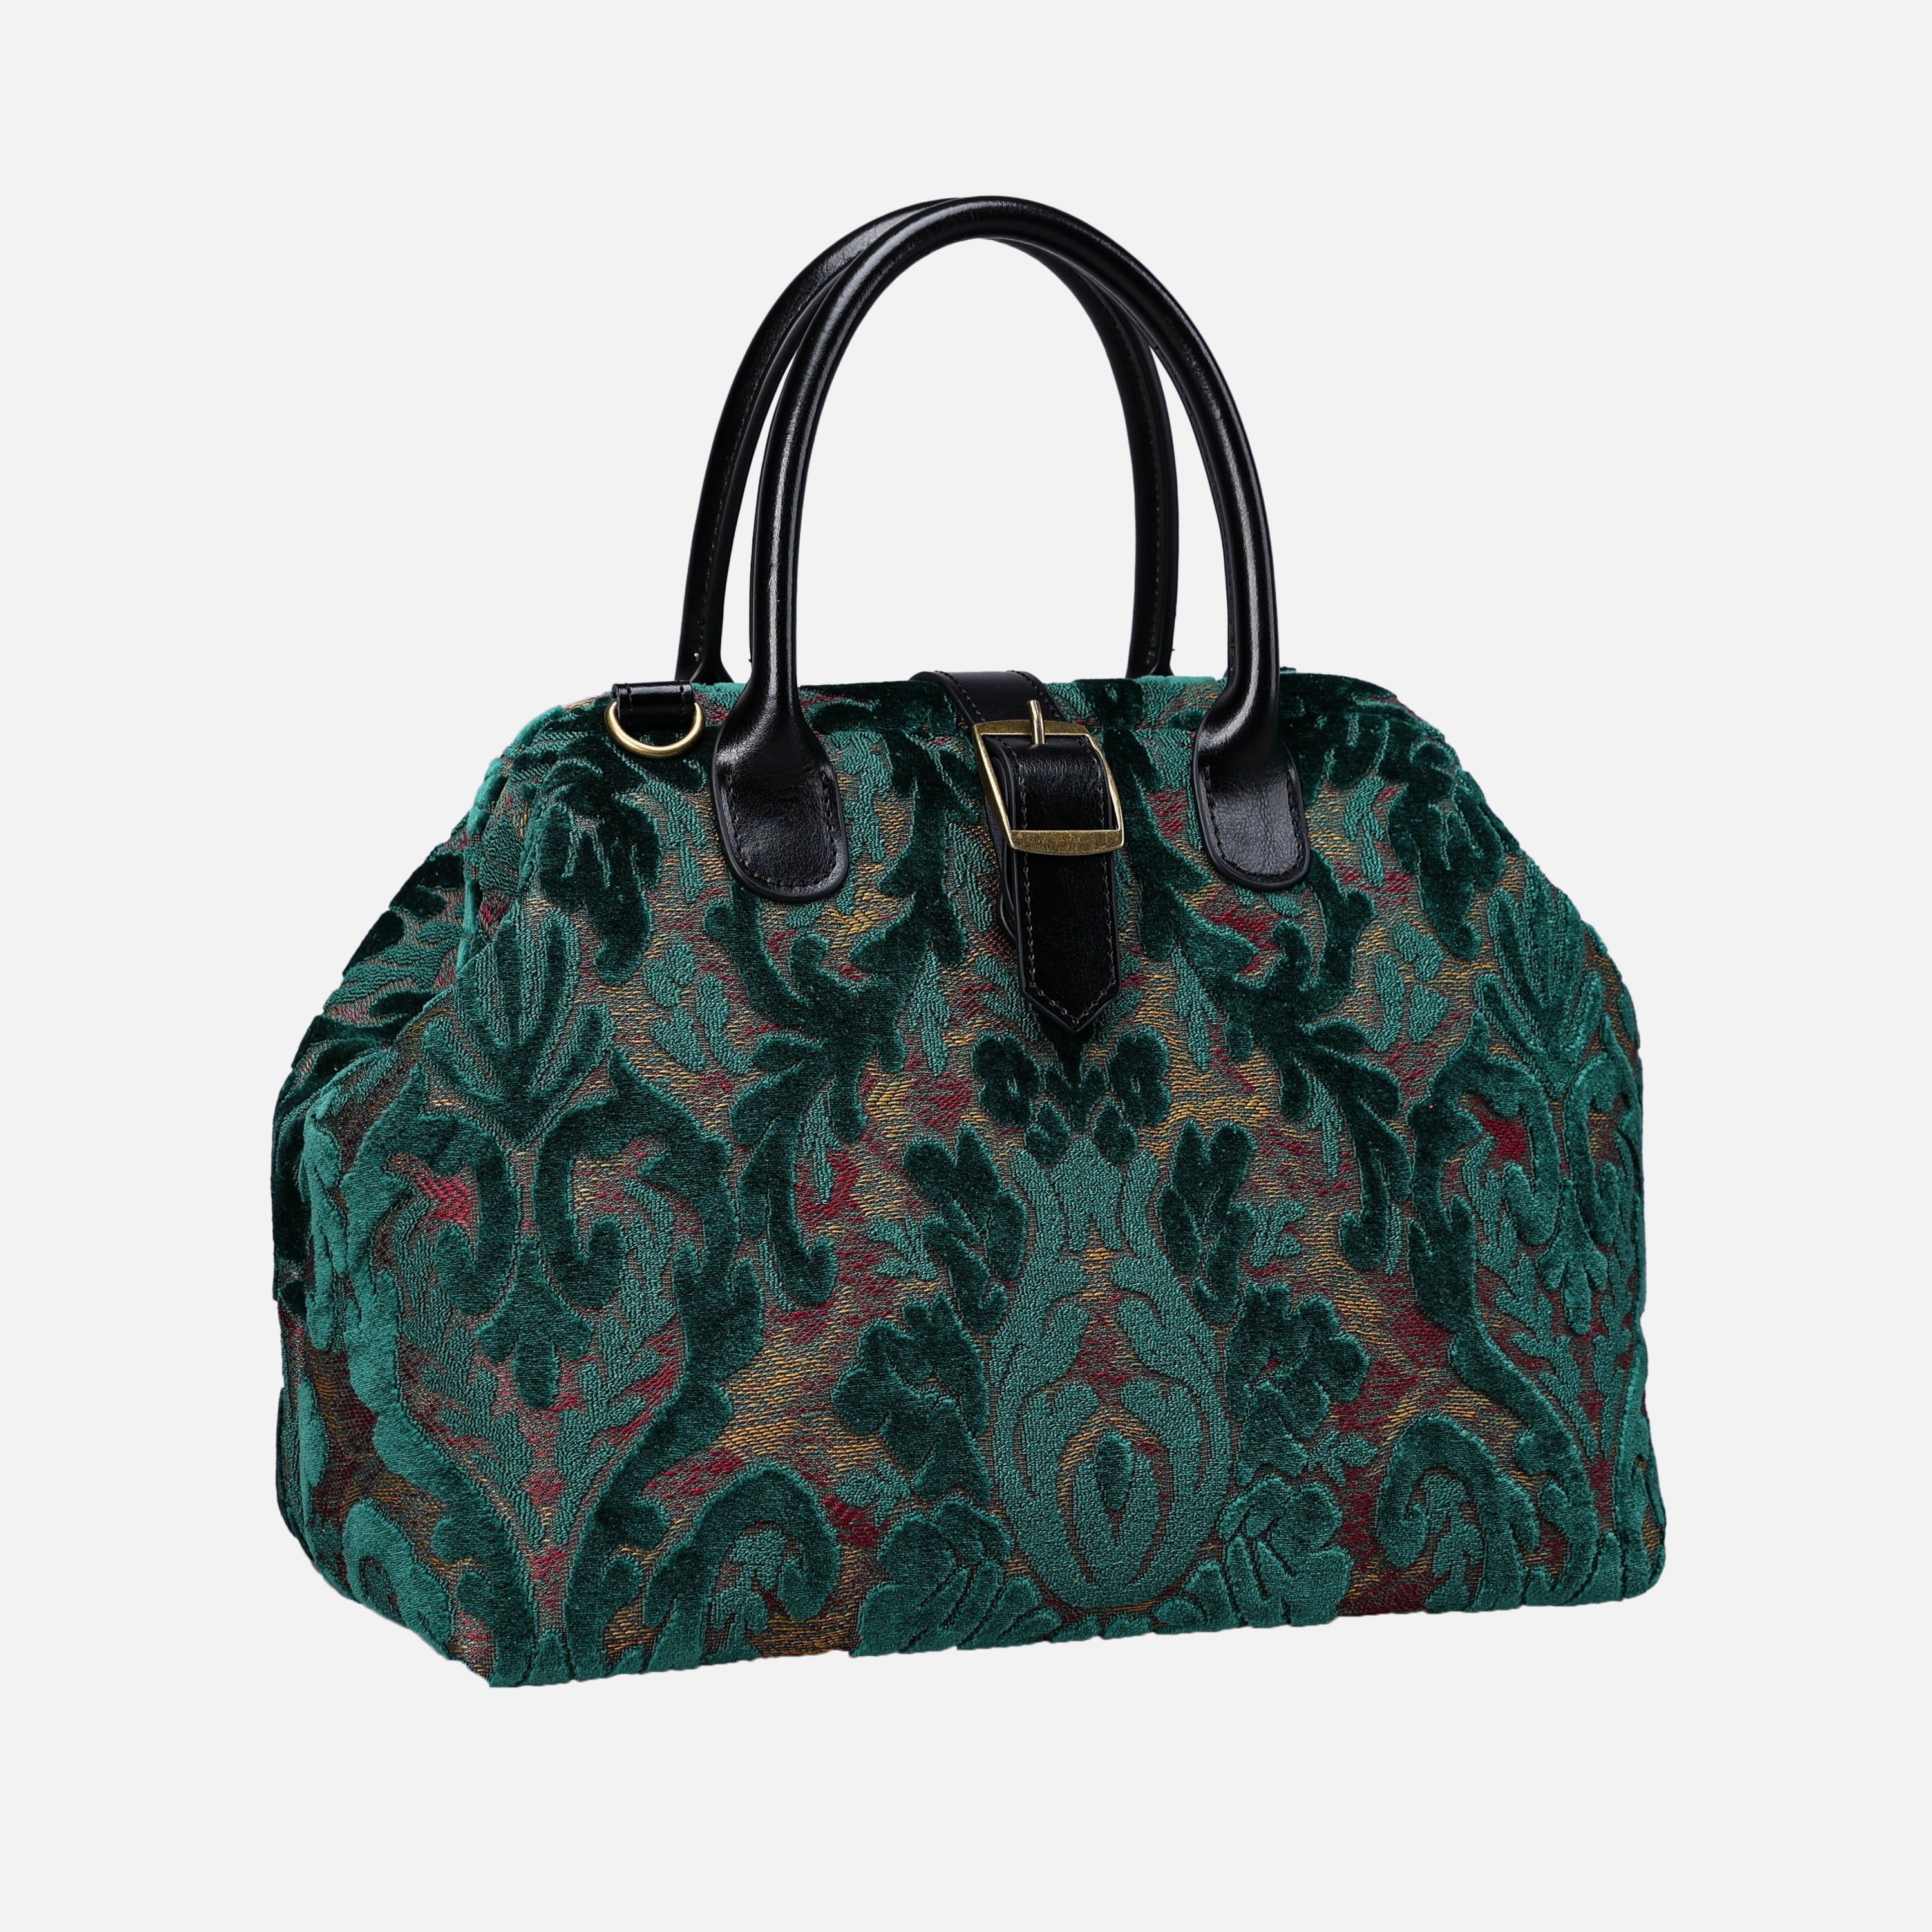 Burnout Velvet Jade Green Carpet Handbag Purse carpet bag MCW Handmade-2